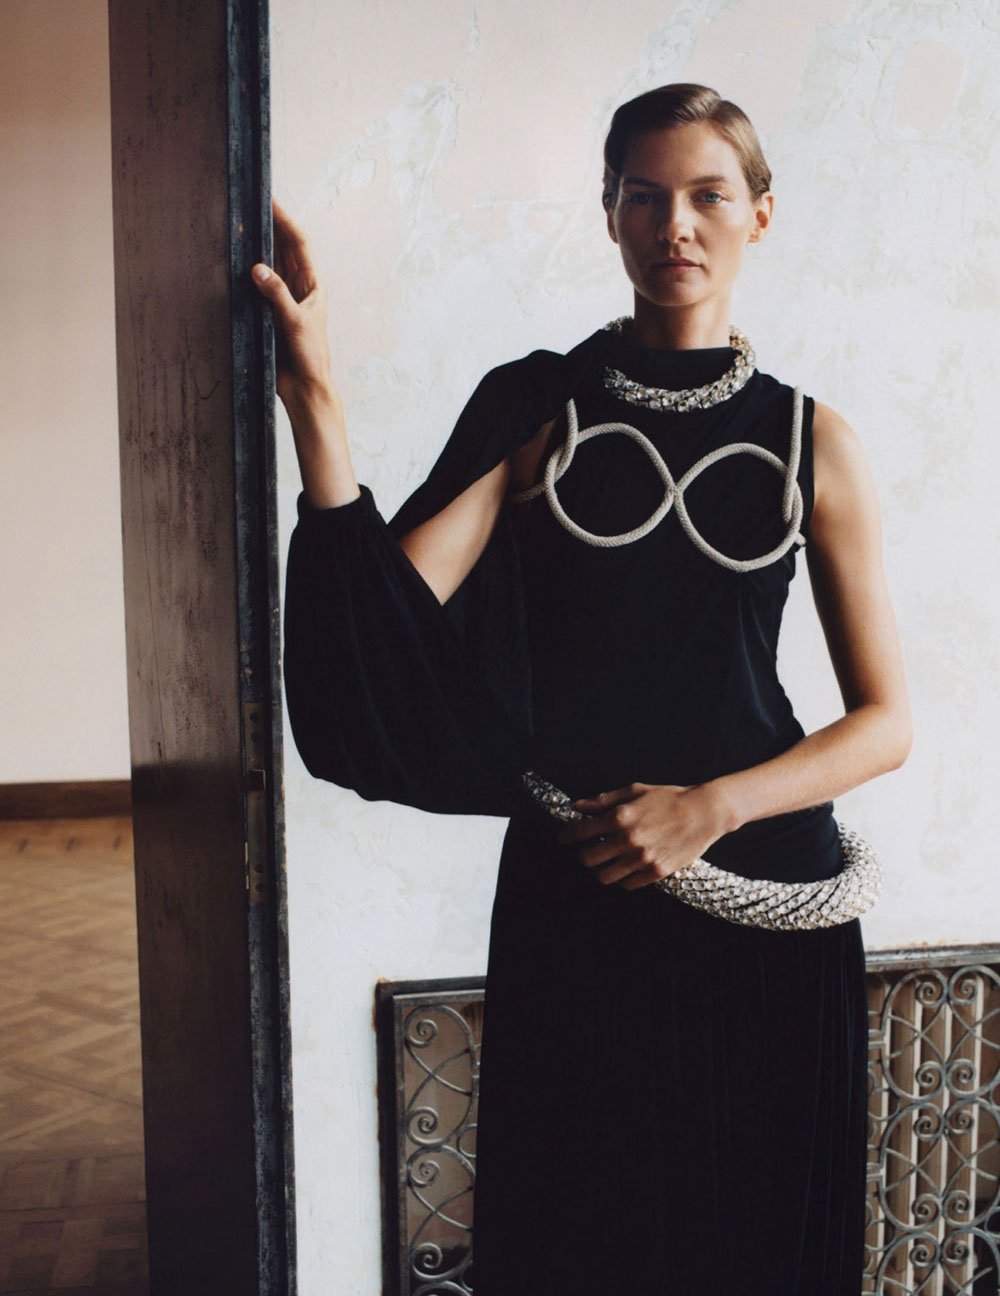 Karolin Wolter by Zoë Ghertner for British Vogue May 2020